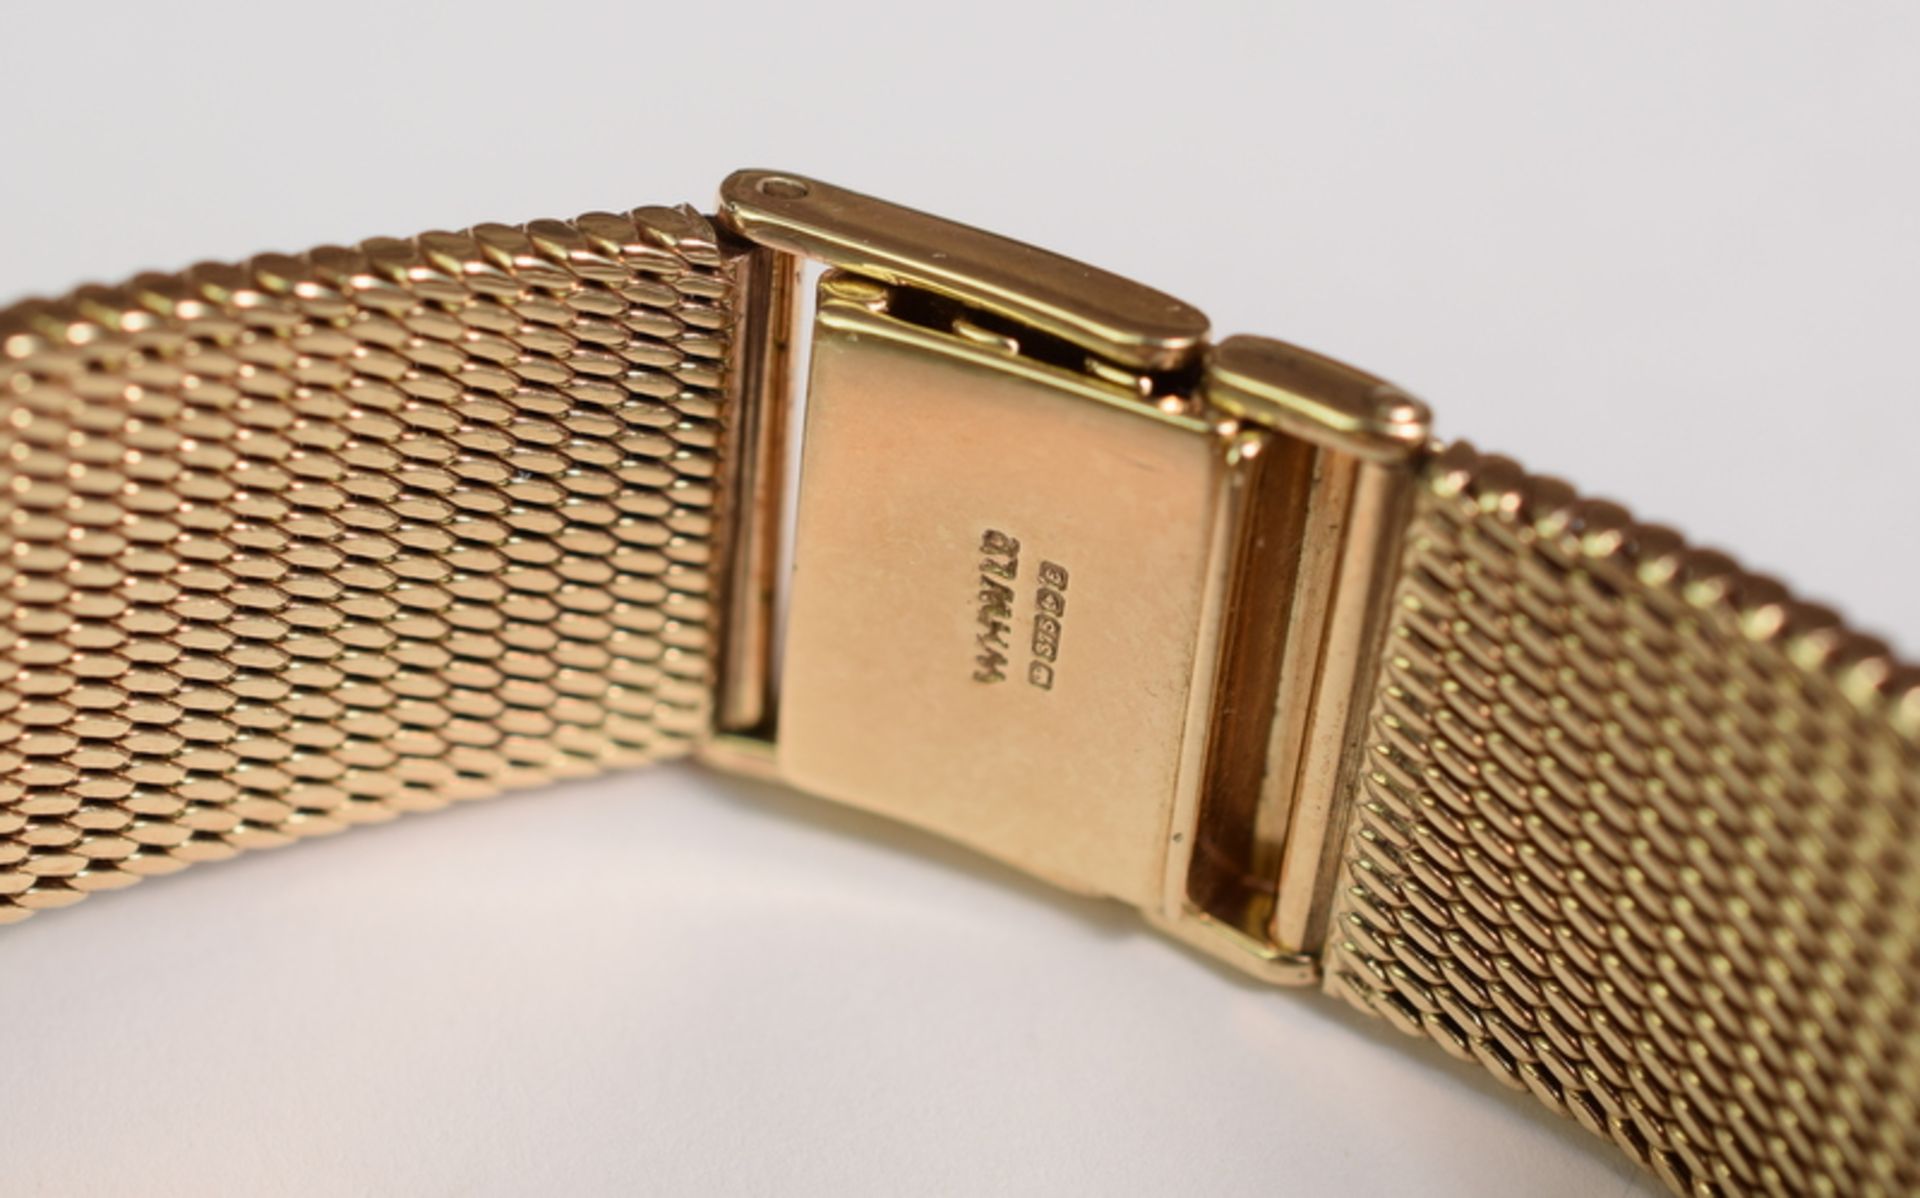 9ct Gold Omega Seamaster On Intergrated 9ct Gold Bracelet - Image 5 of 10